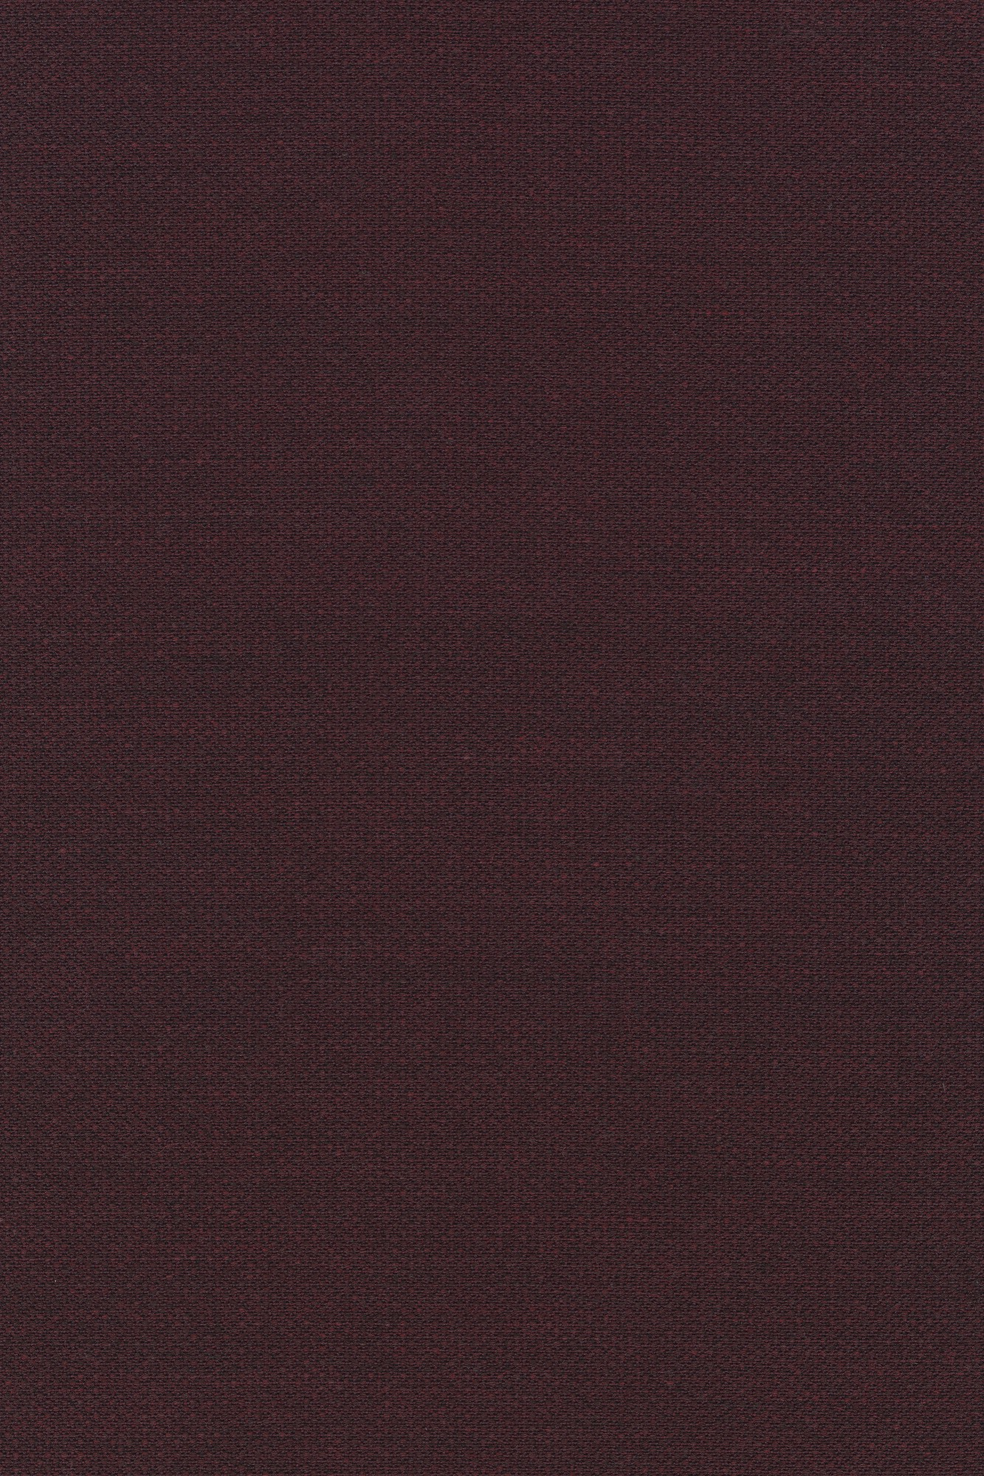 Fabric sample Fiord 591 purple